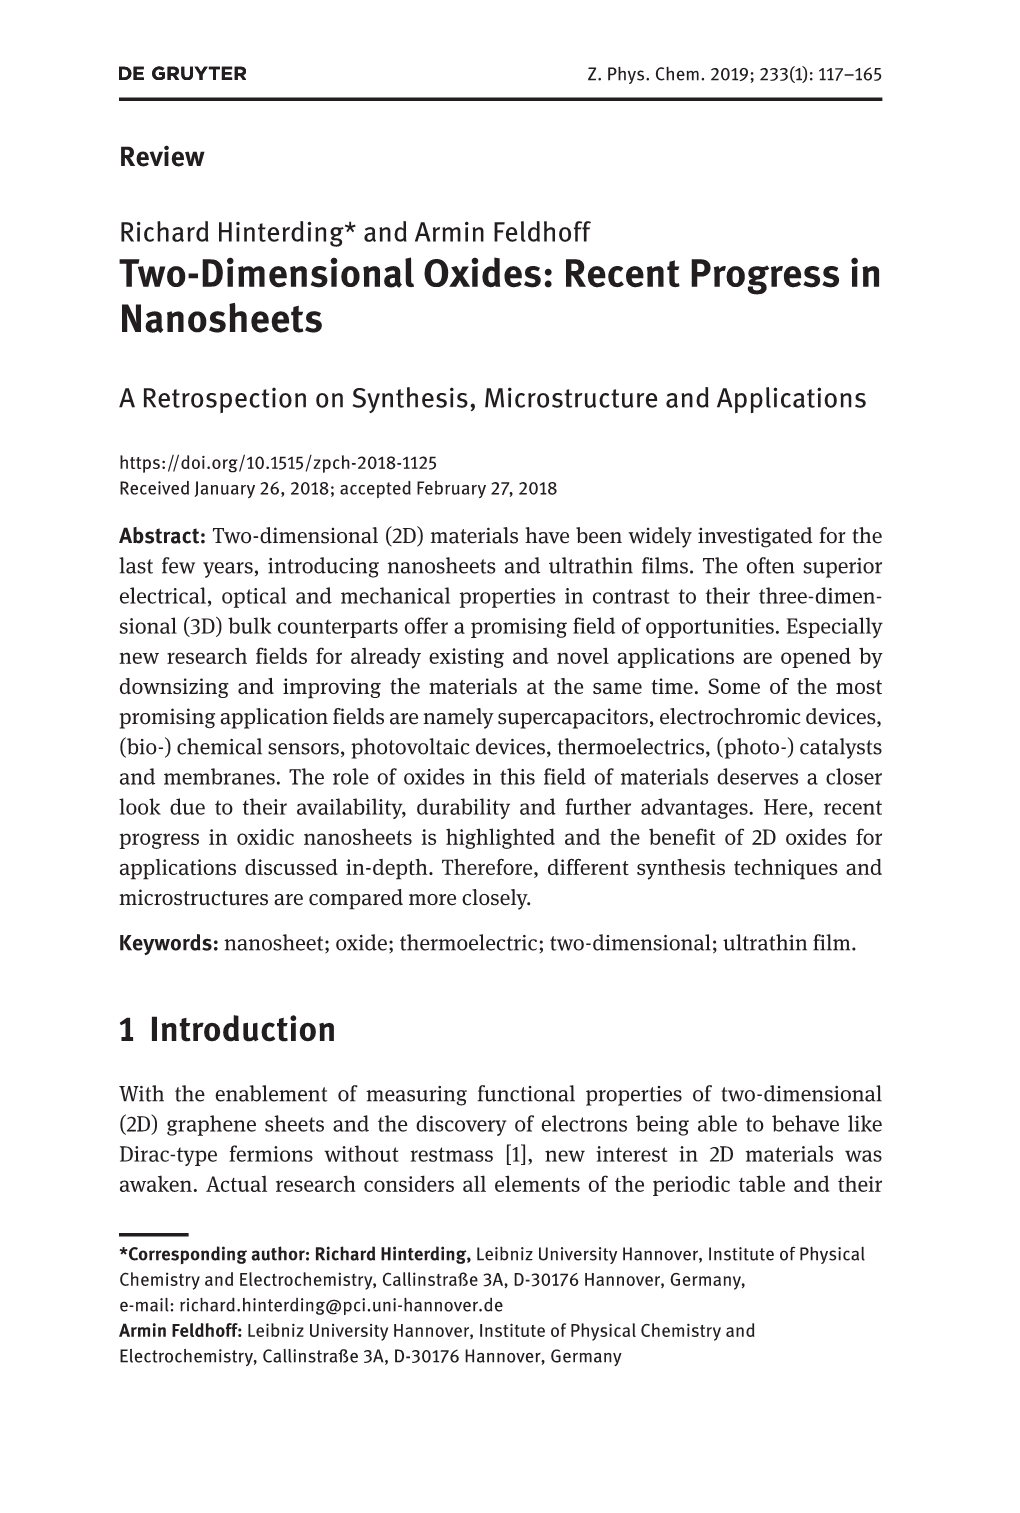 Two-Dimensional Oxides: Recent Progress in Nanosheets